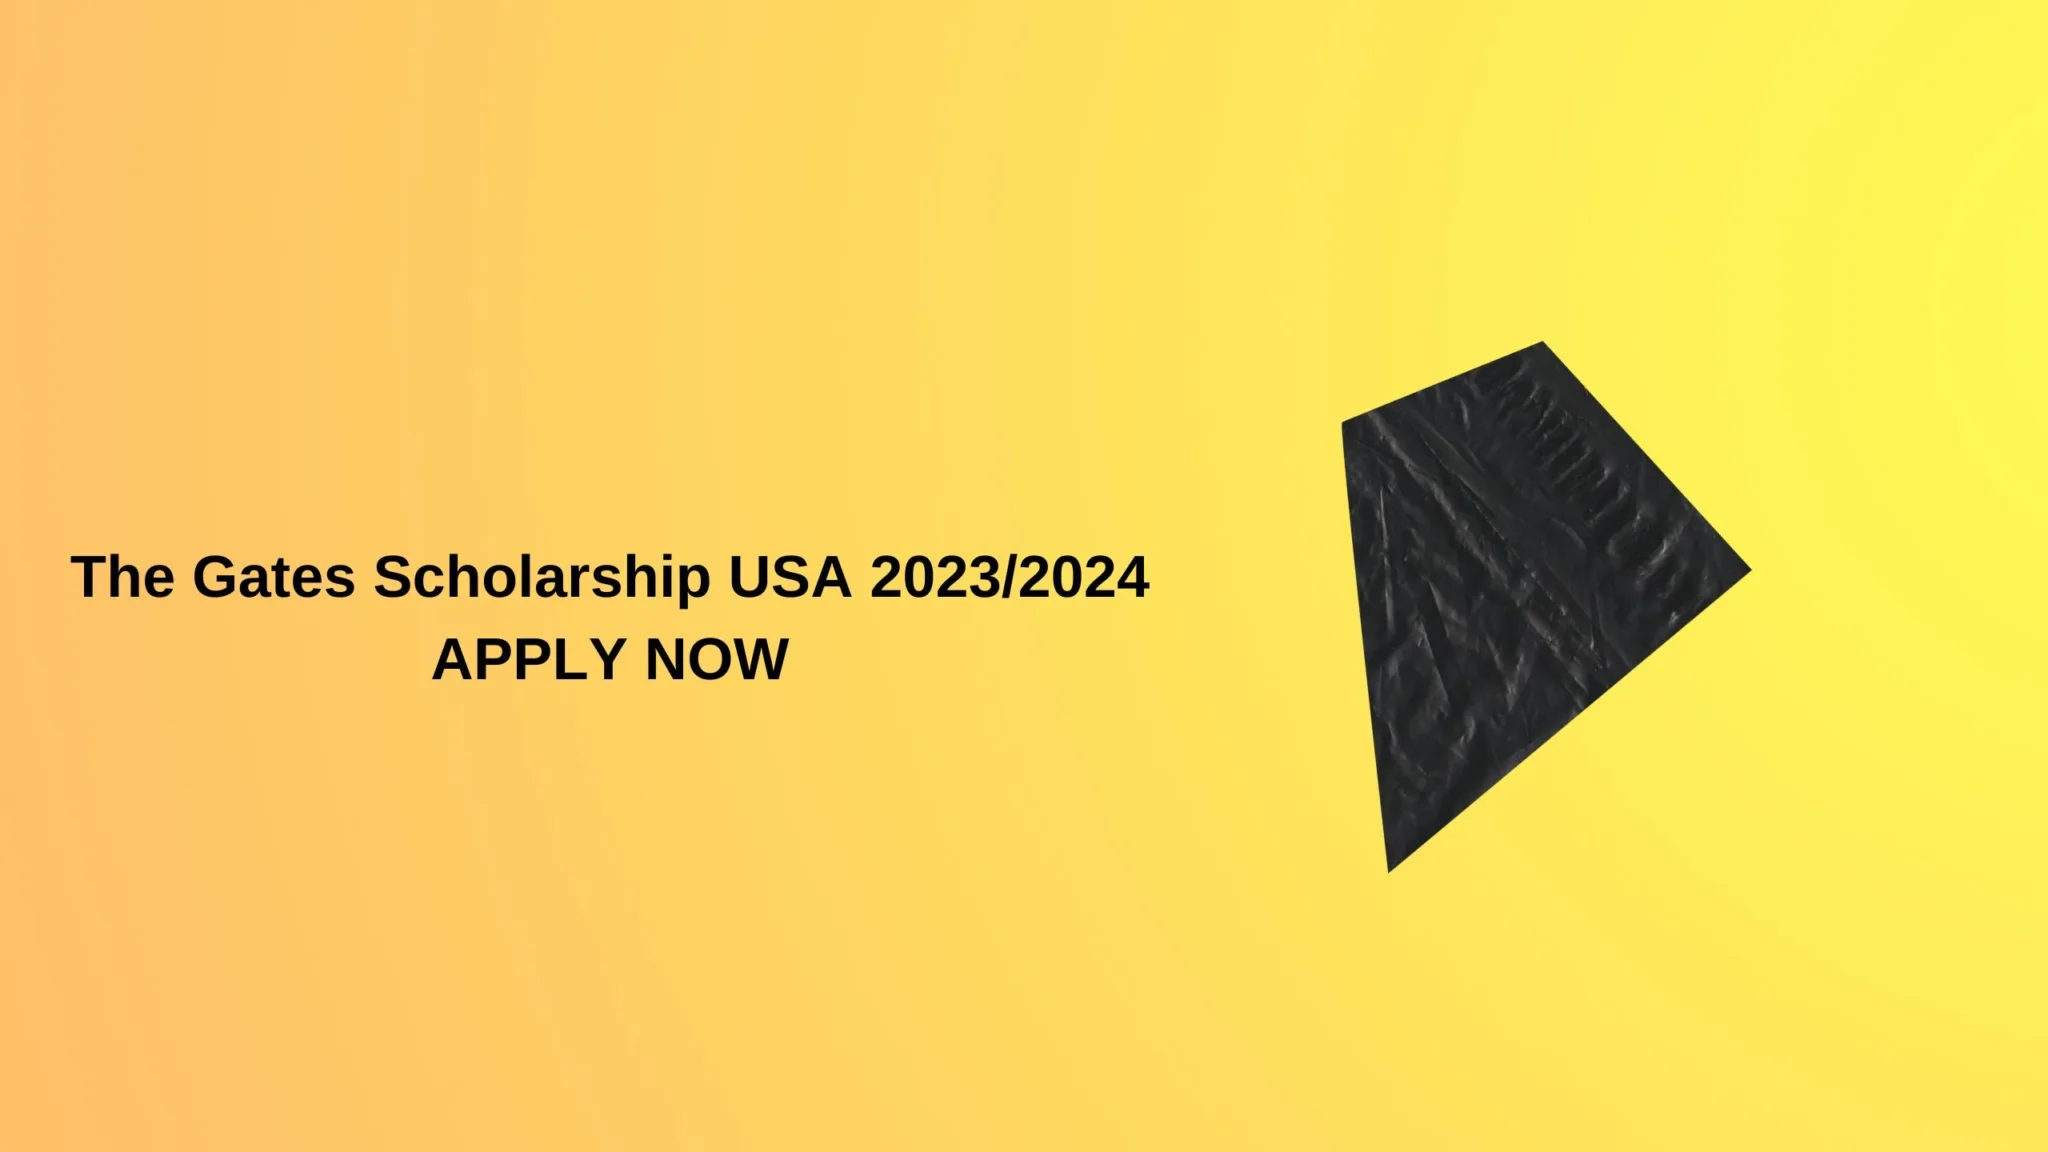 The Gates Scholarship USA 2023